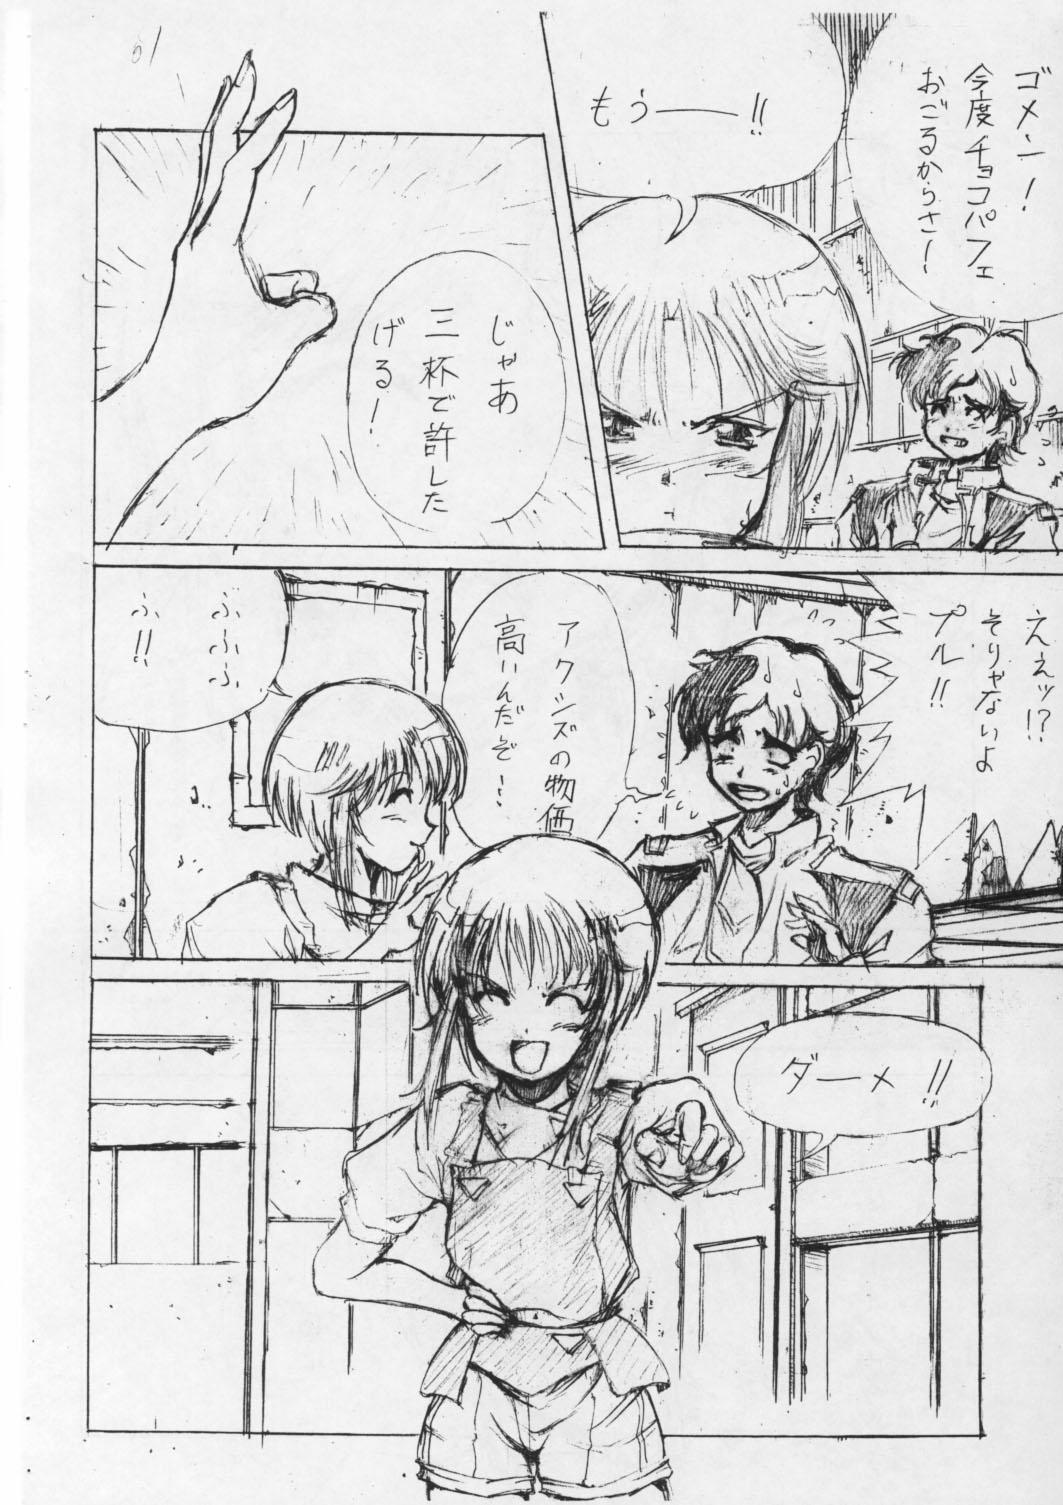 Periscope PLE PLE ELPEO PLE! TYPE-ZERO - Gundam zz Hardcore - Page 15